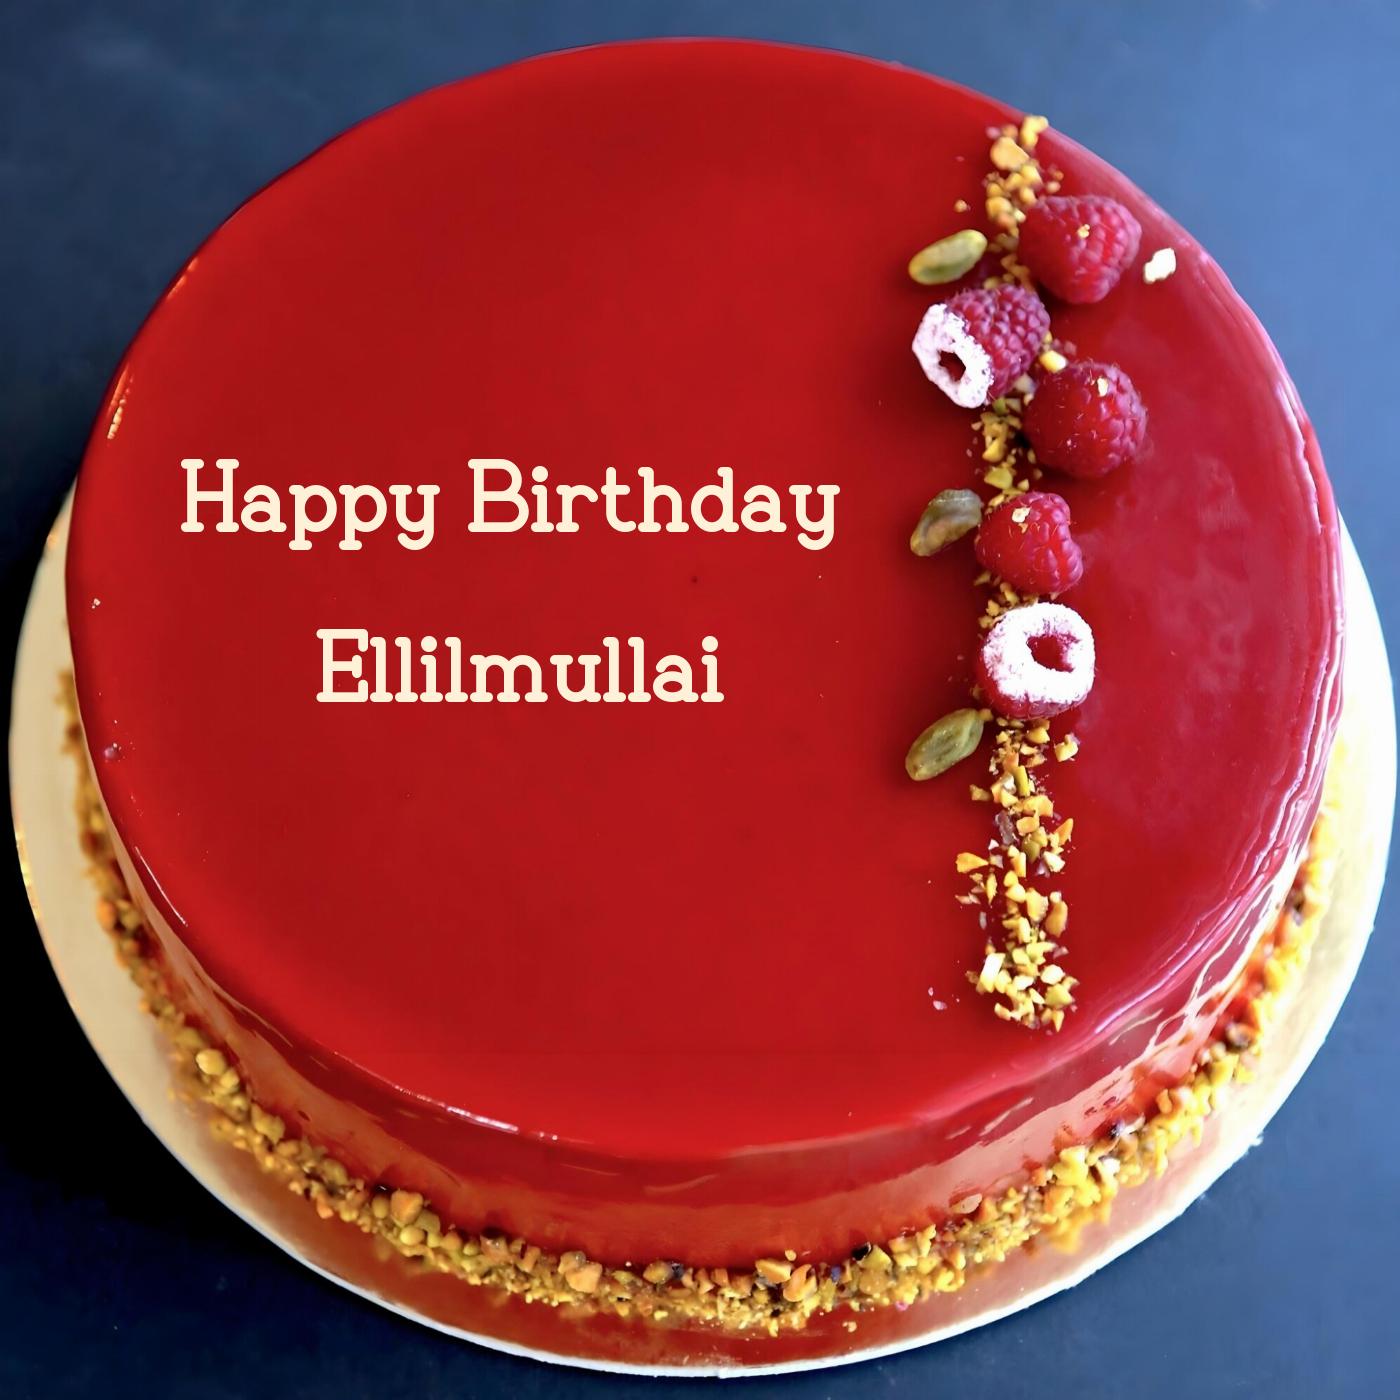 Happy Birthday Ellilmullai Red Raspberry Cake